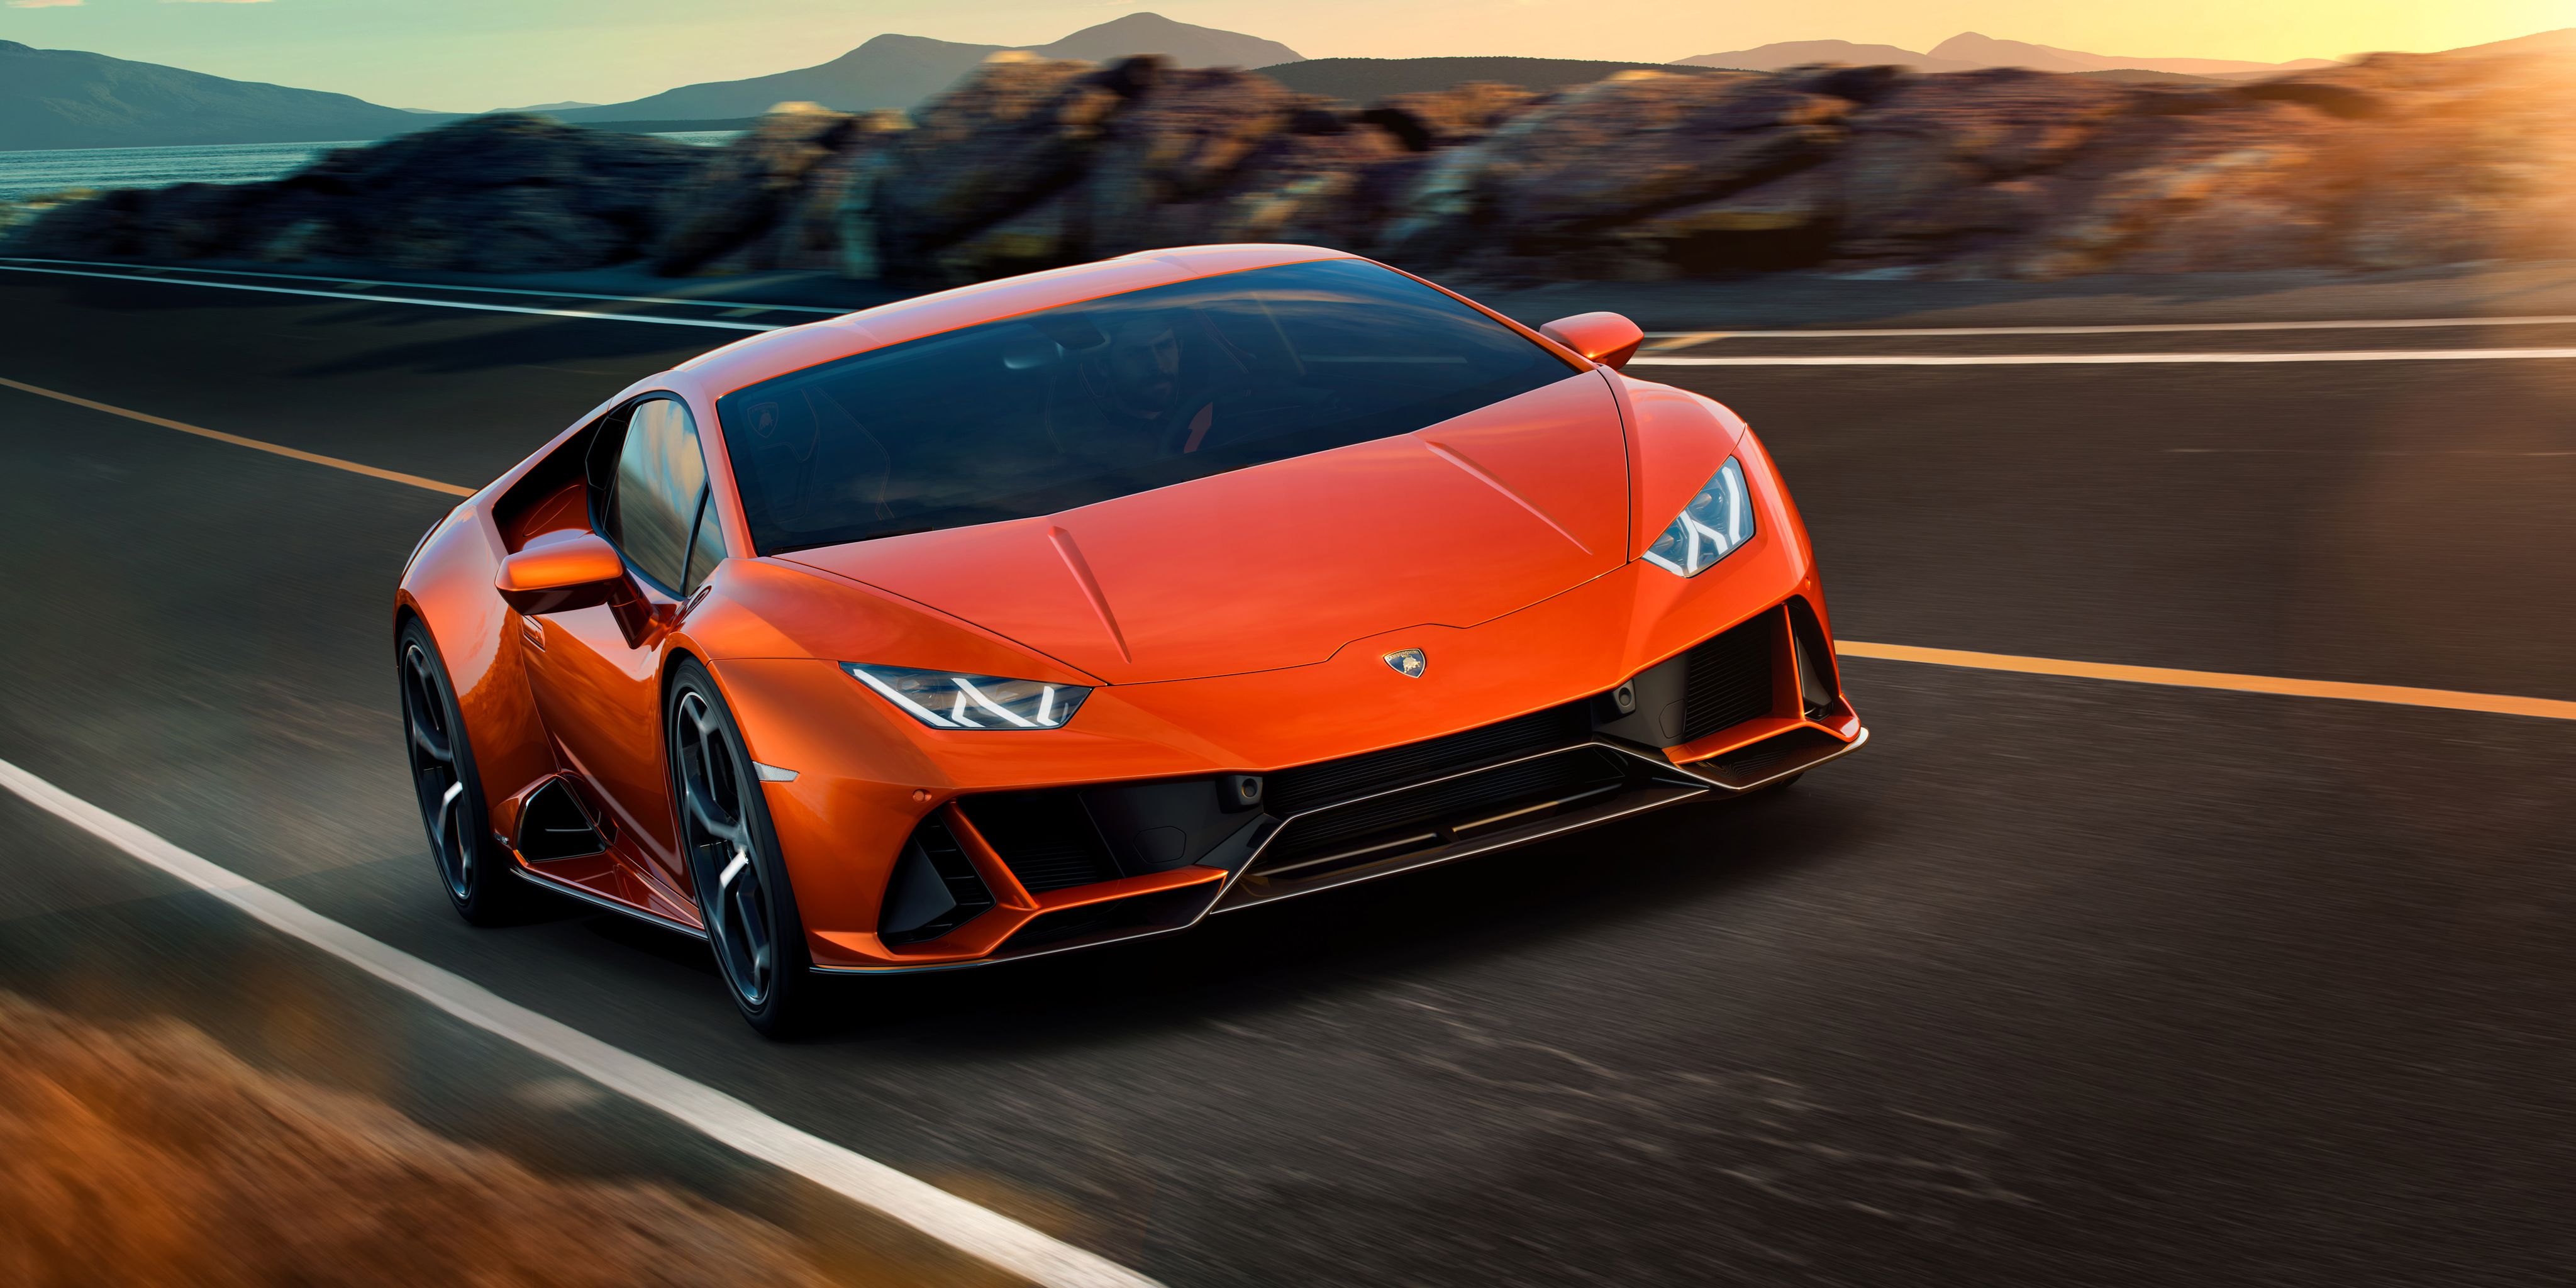 Lamborghini Huracan EVO 2019 4k, HD Cars, 4k Wallpaper, Image, Background, Photo and Picture